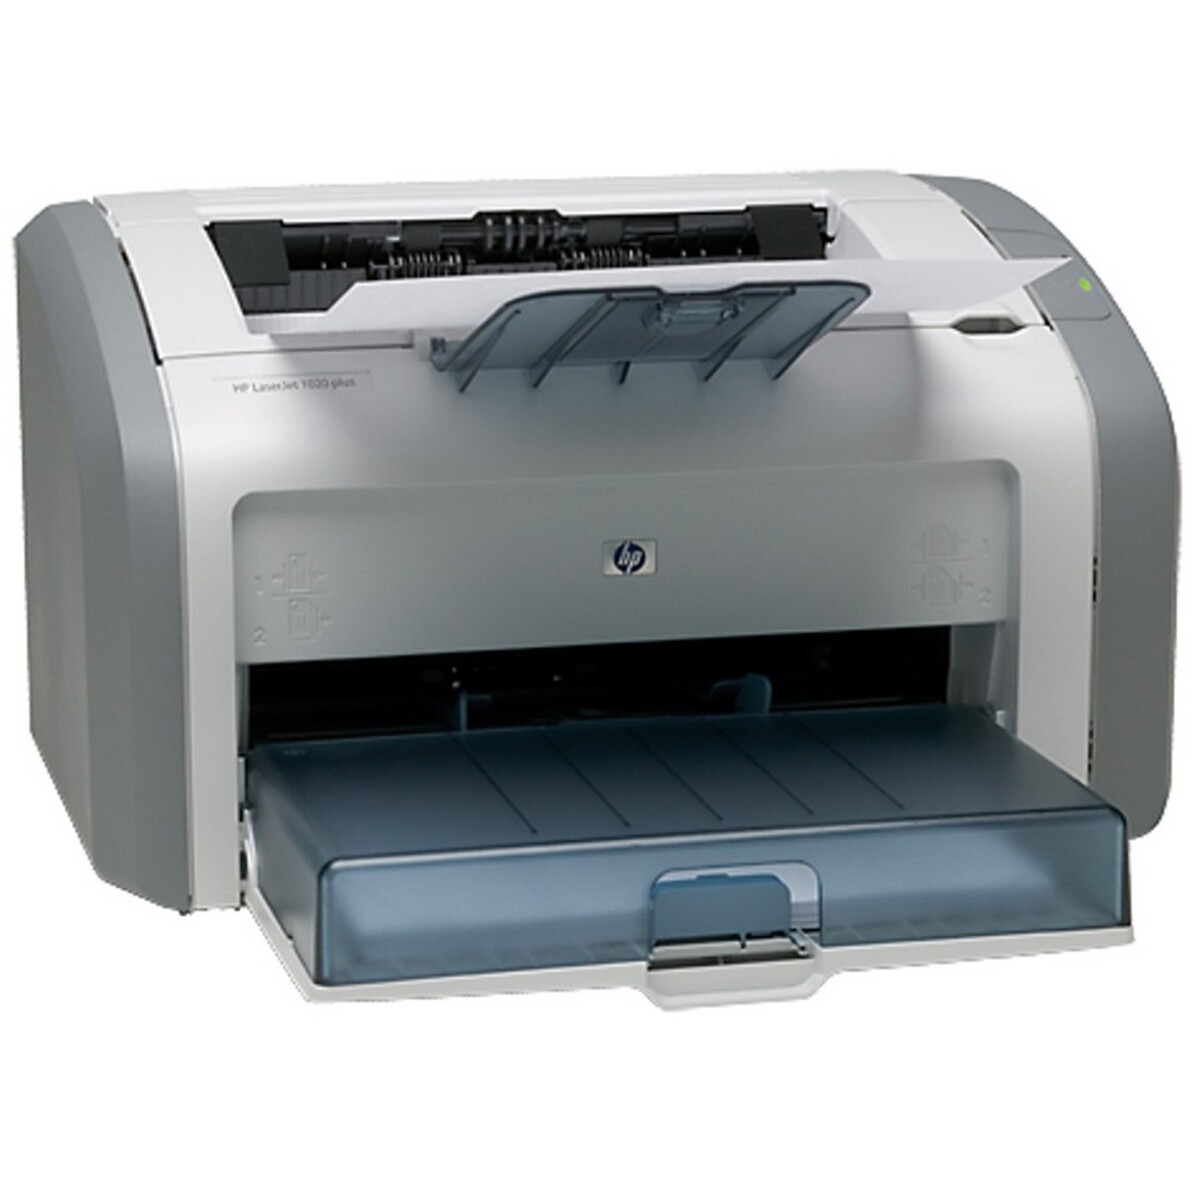 HP LaserJet Printer 1020 Plus